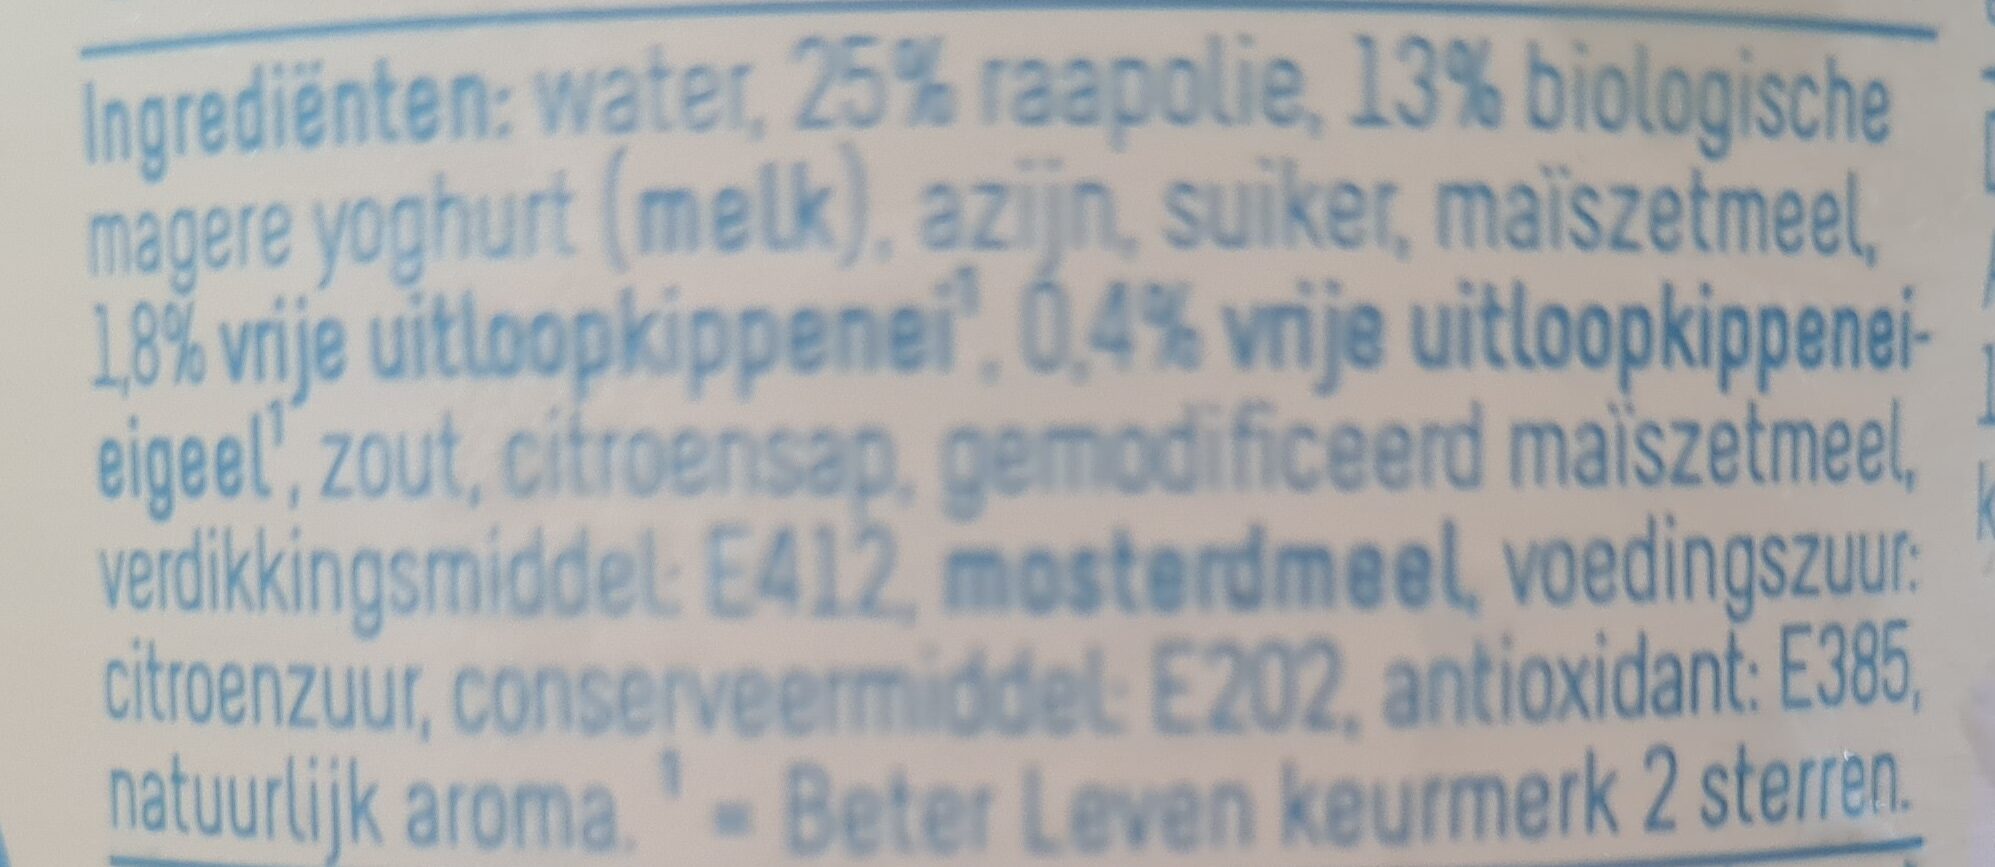 Yogomild - Ingredients - nl